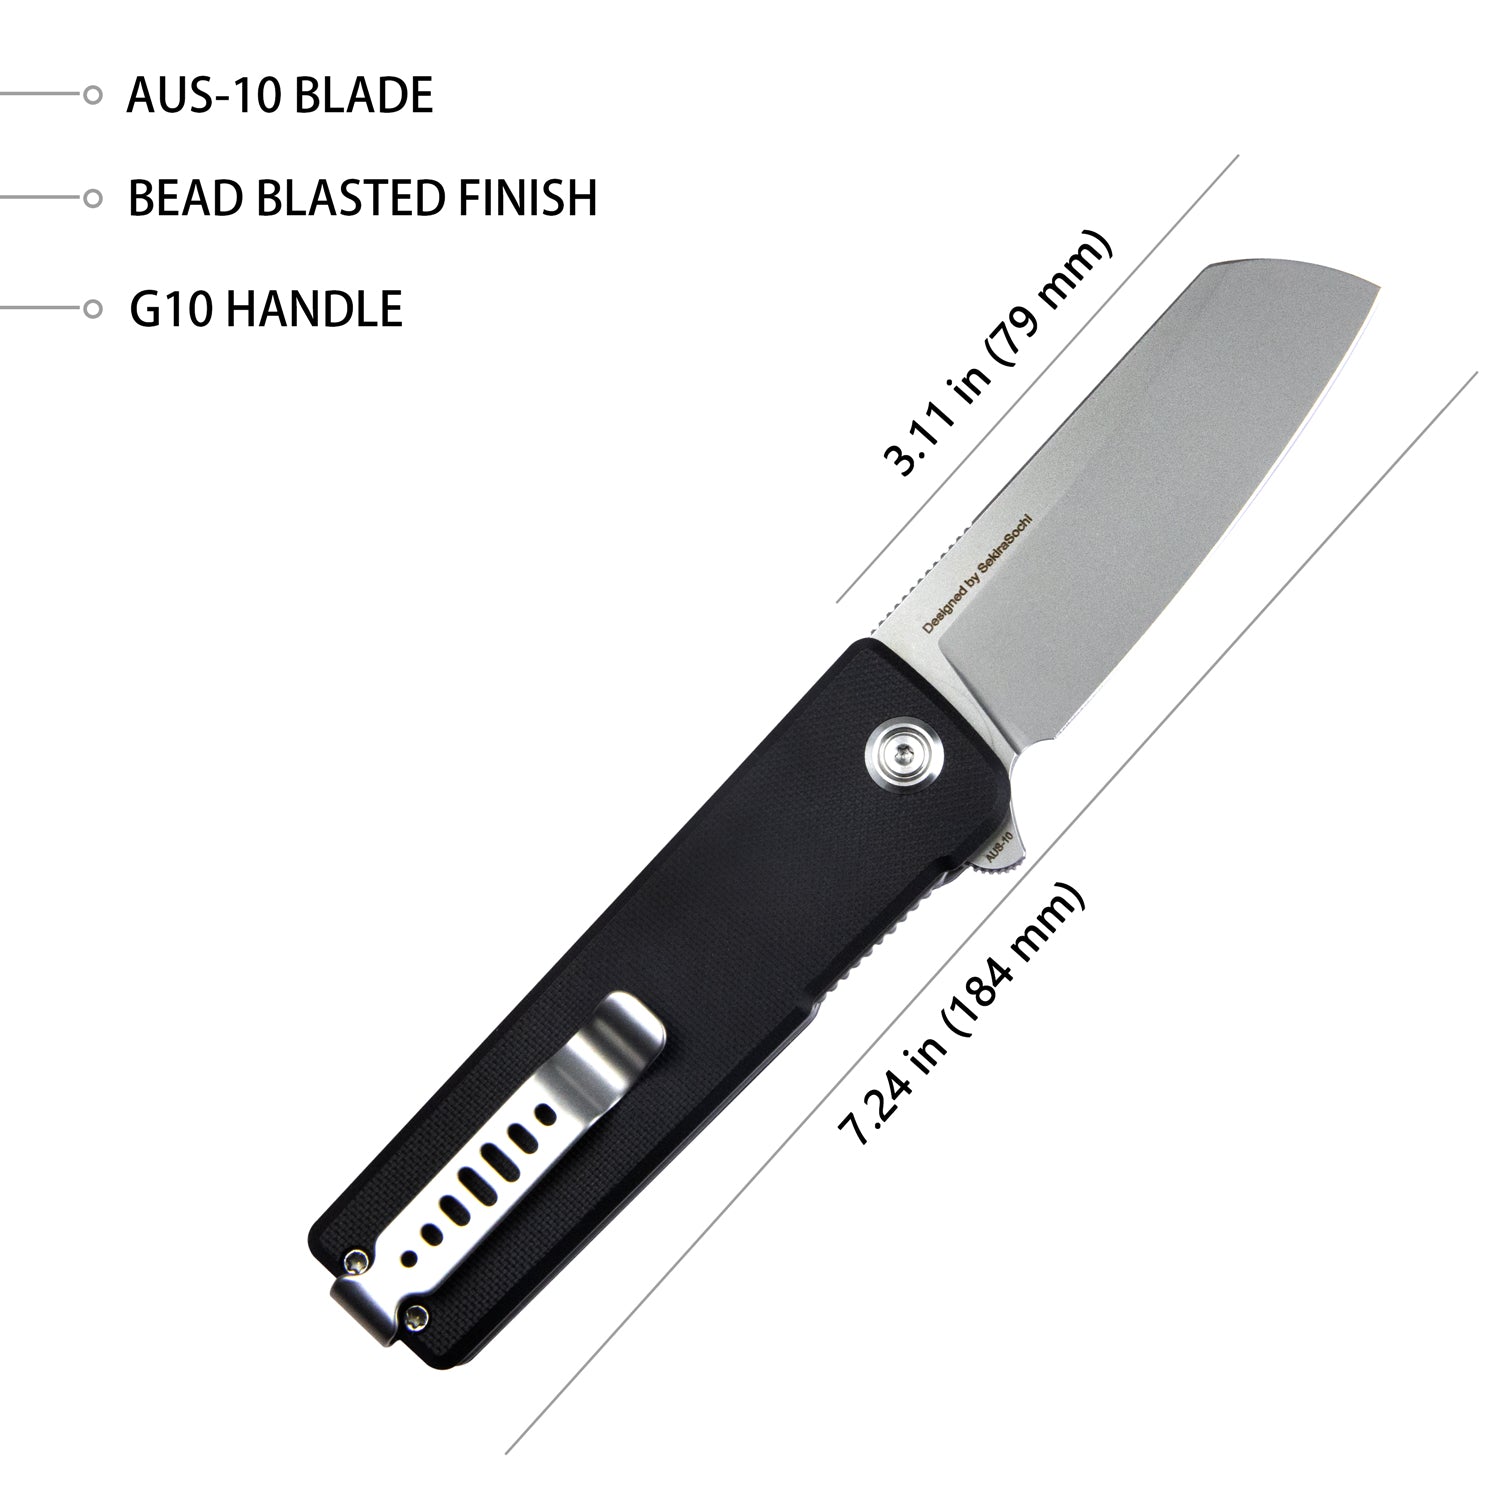 Kubey Sailor Klappmesser Liner Lock Flipper Outdoor Pocket Knife Black G10 Handle 3.11" Bead Blasted AUS-10 Blade KU317A